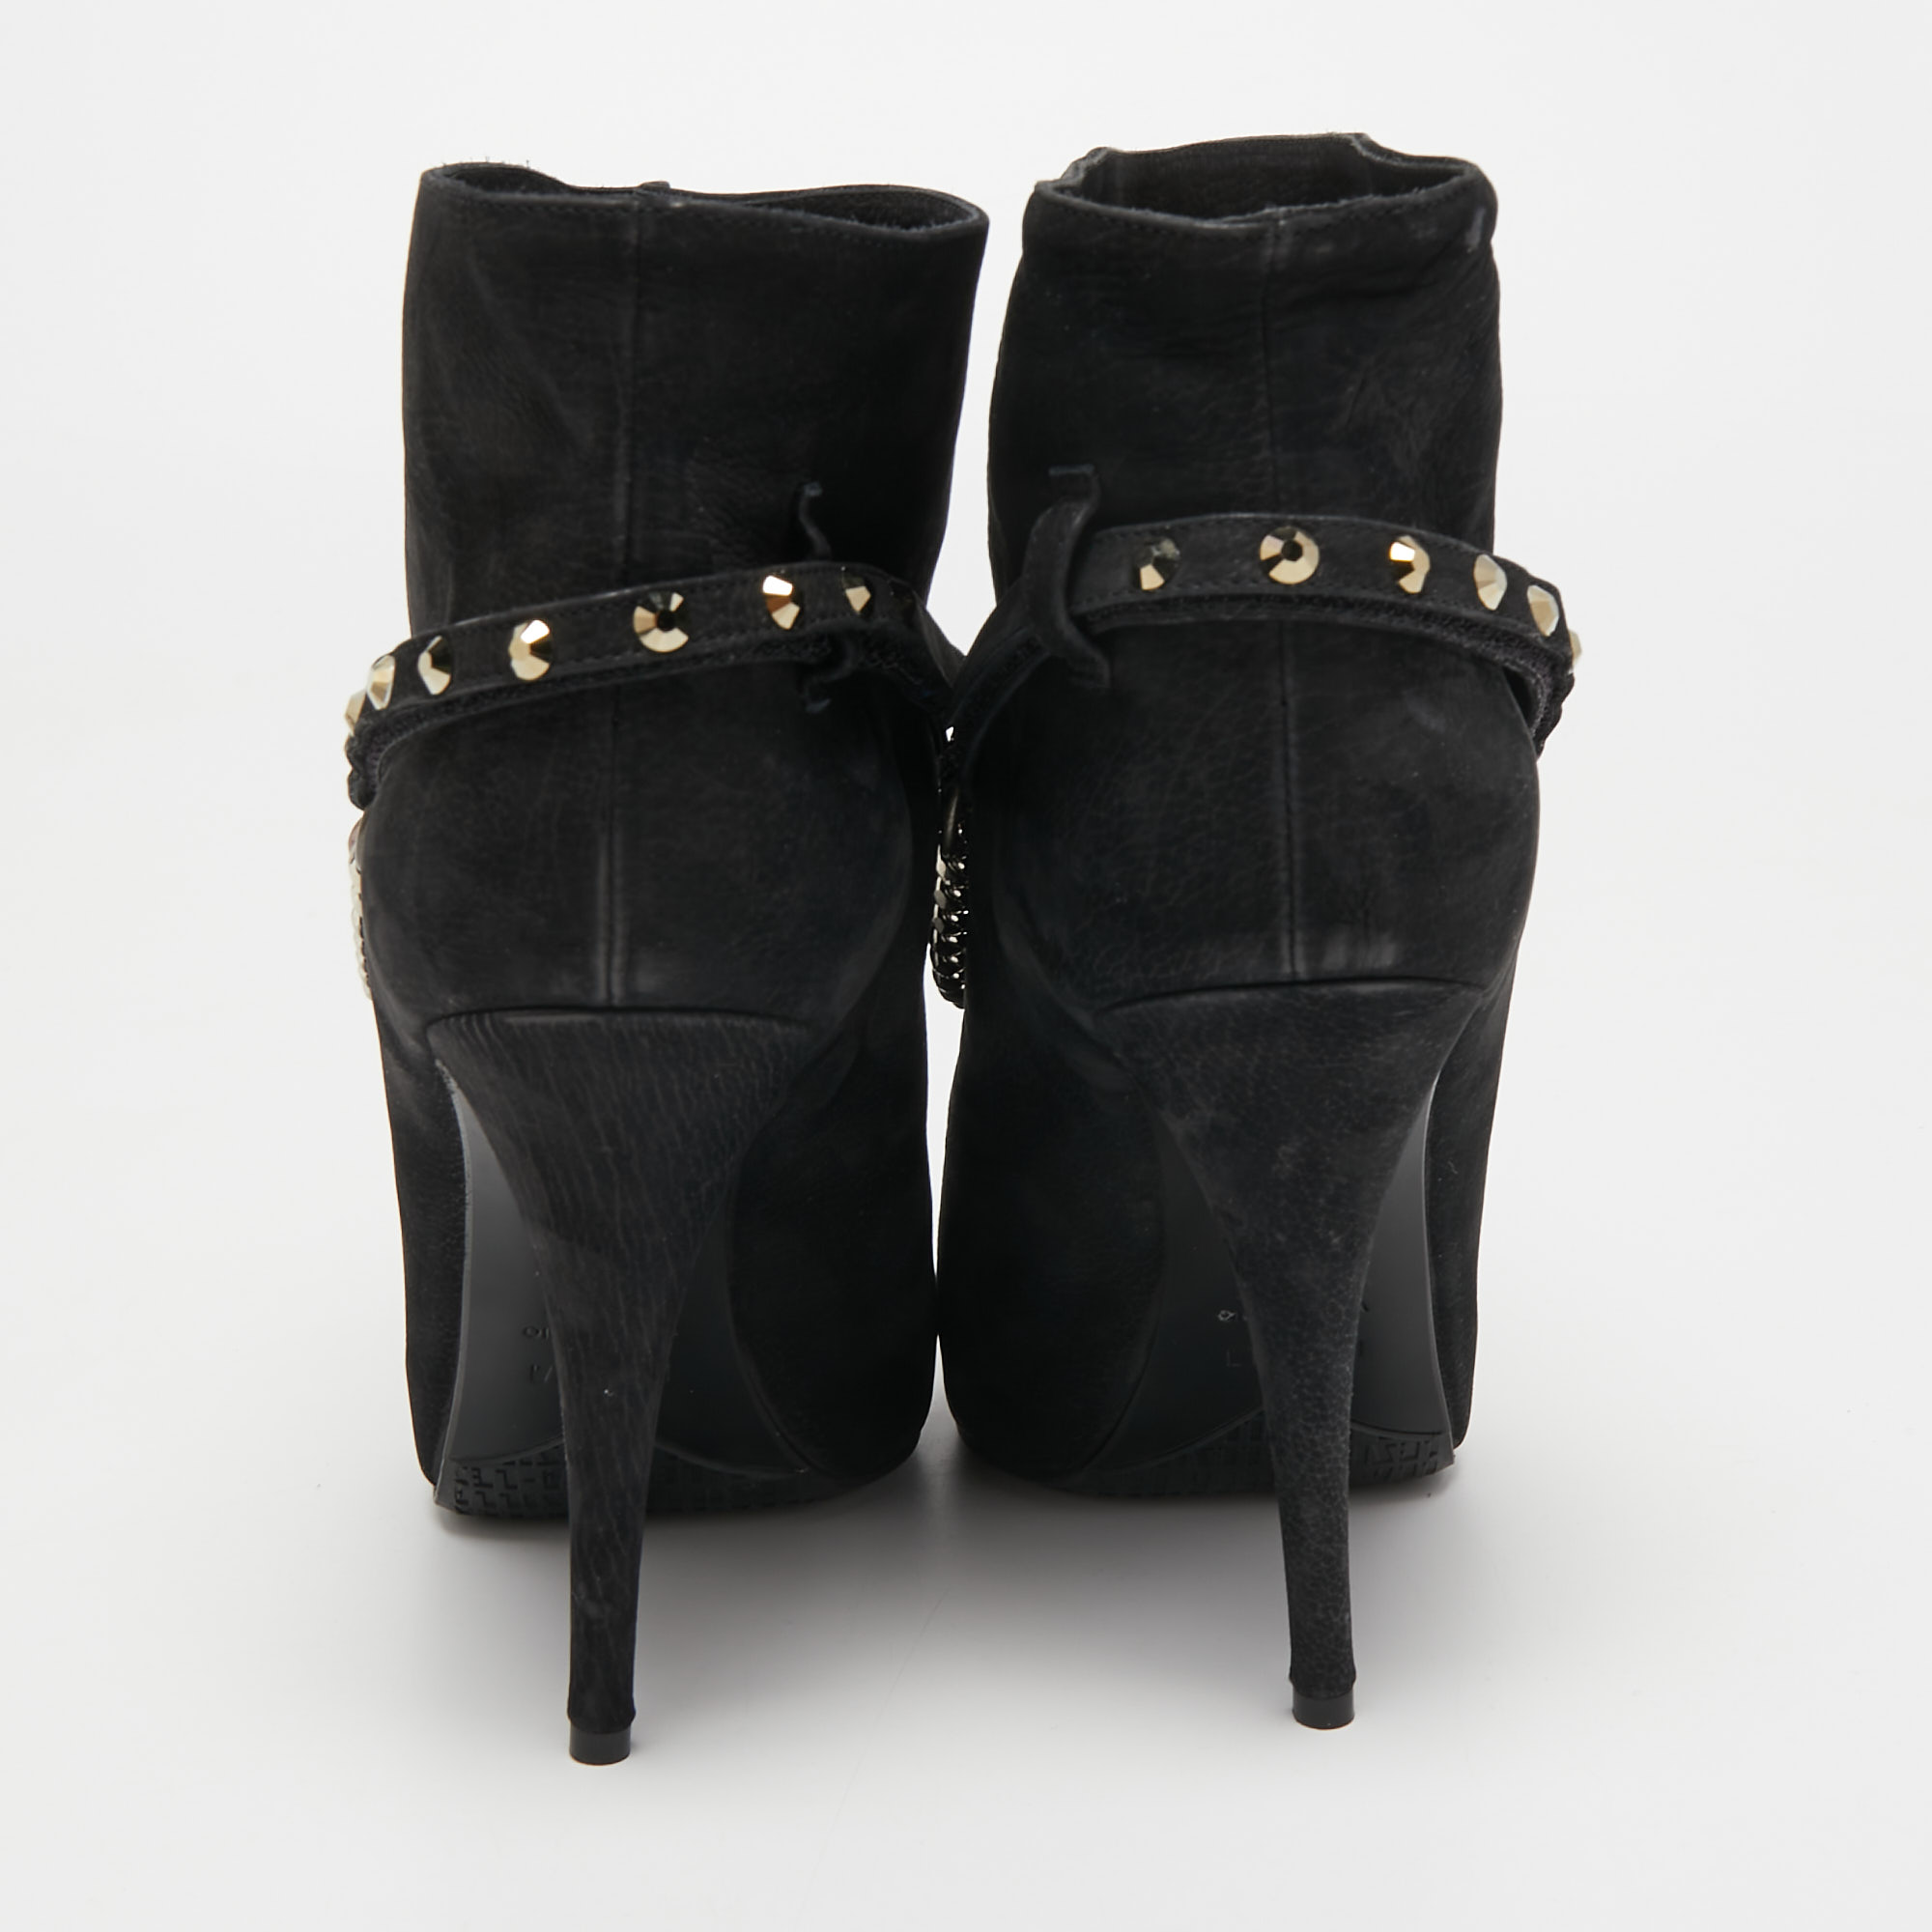 Le Silla Black Nubuck Leather Stivaletto Ankle Boots Size 40